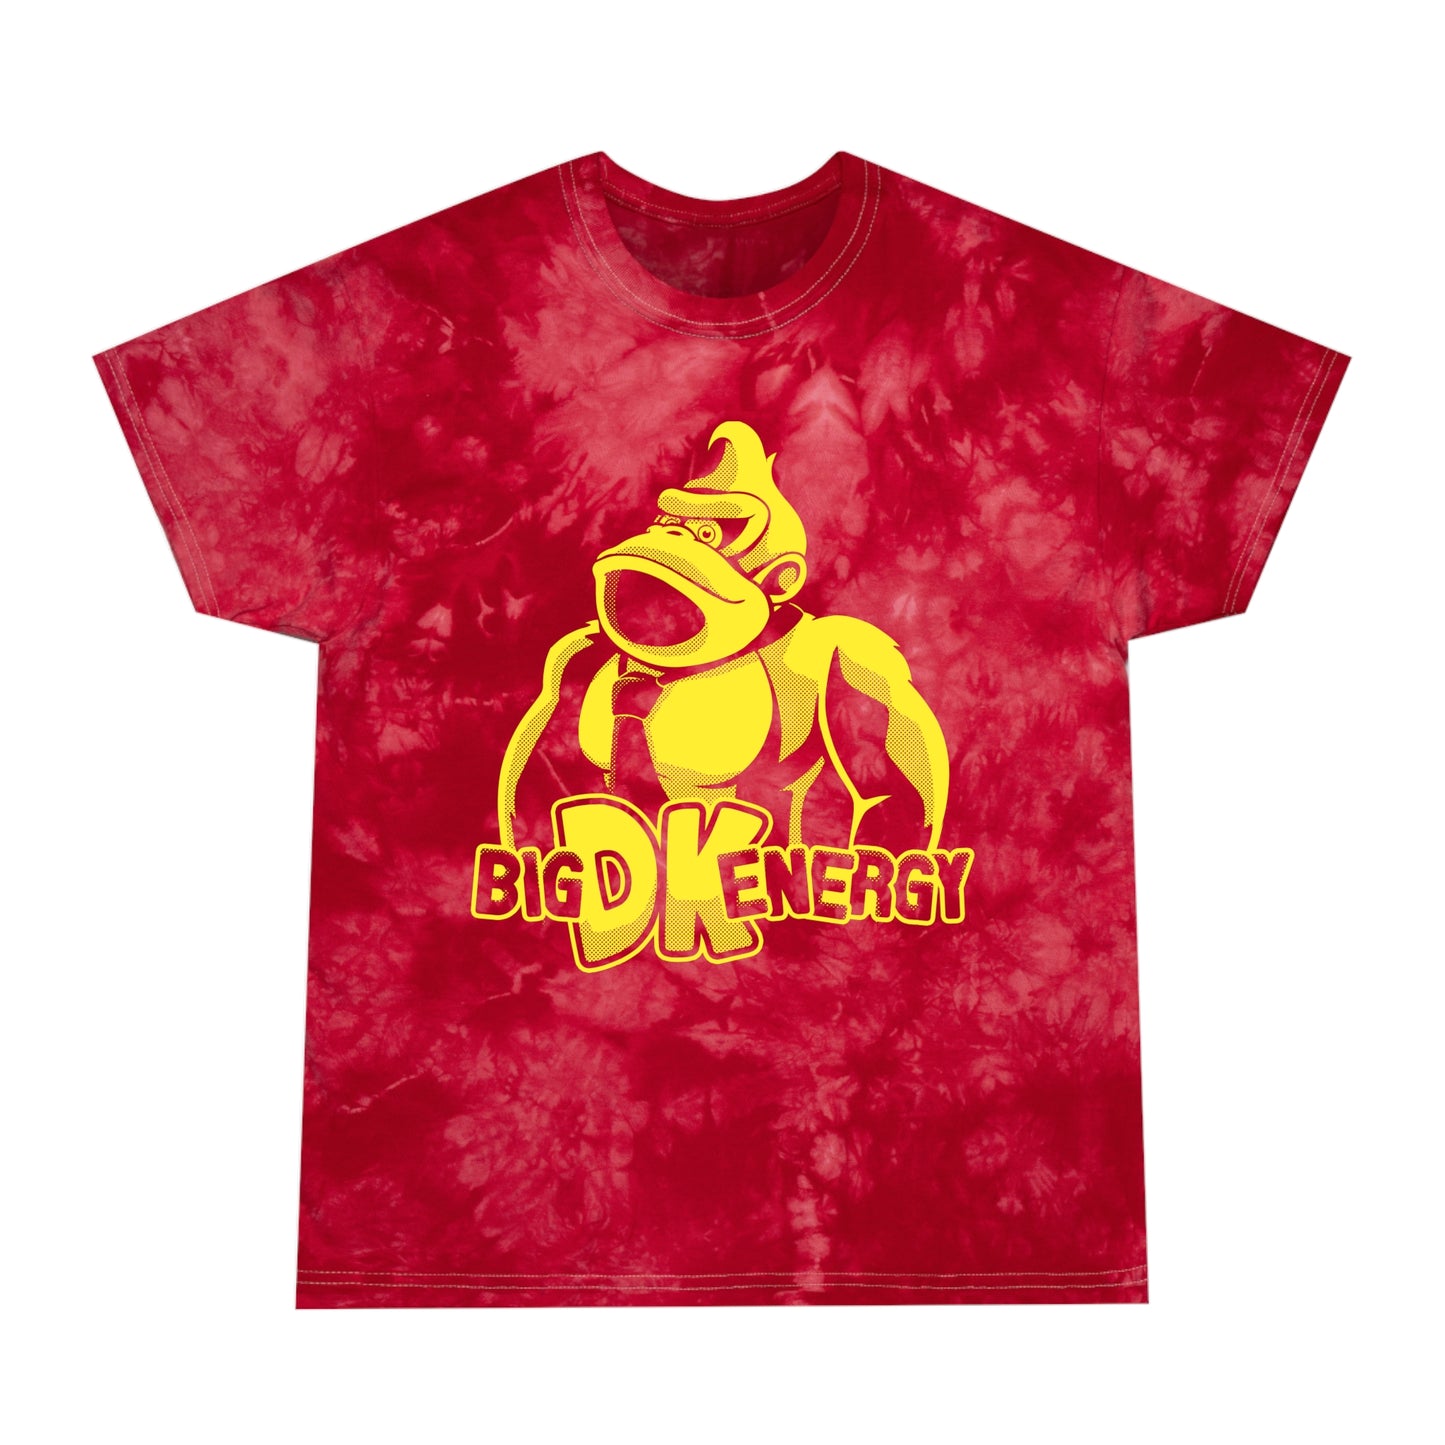 Big DK Energy tie-dye t-shirt